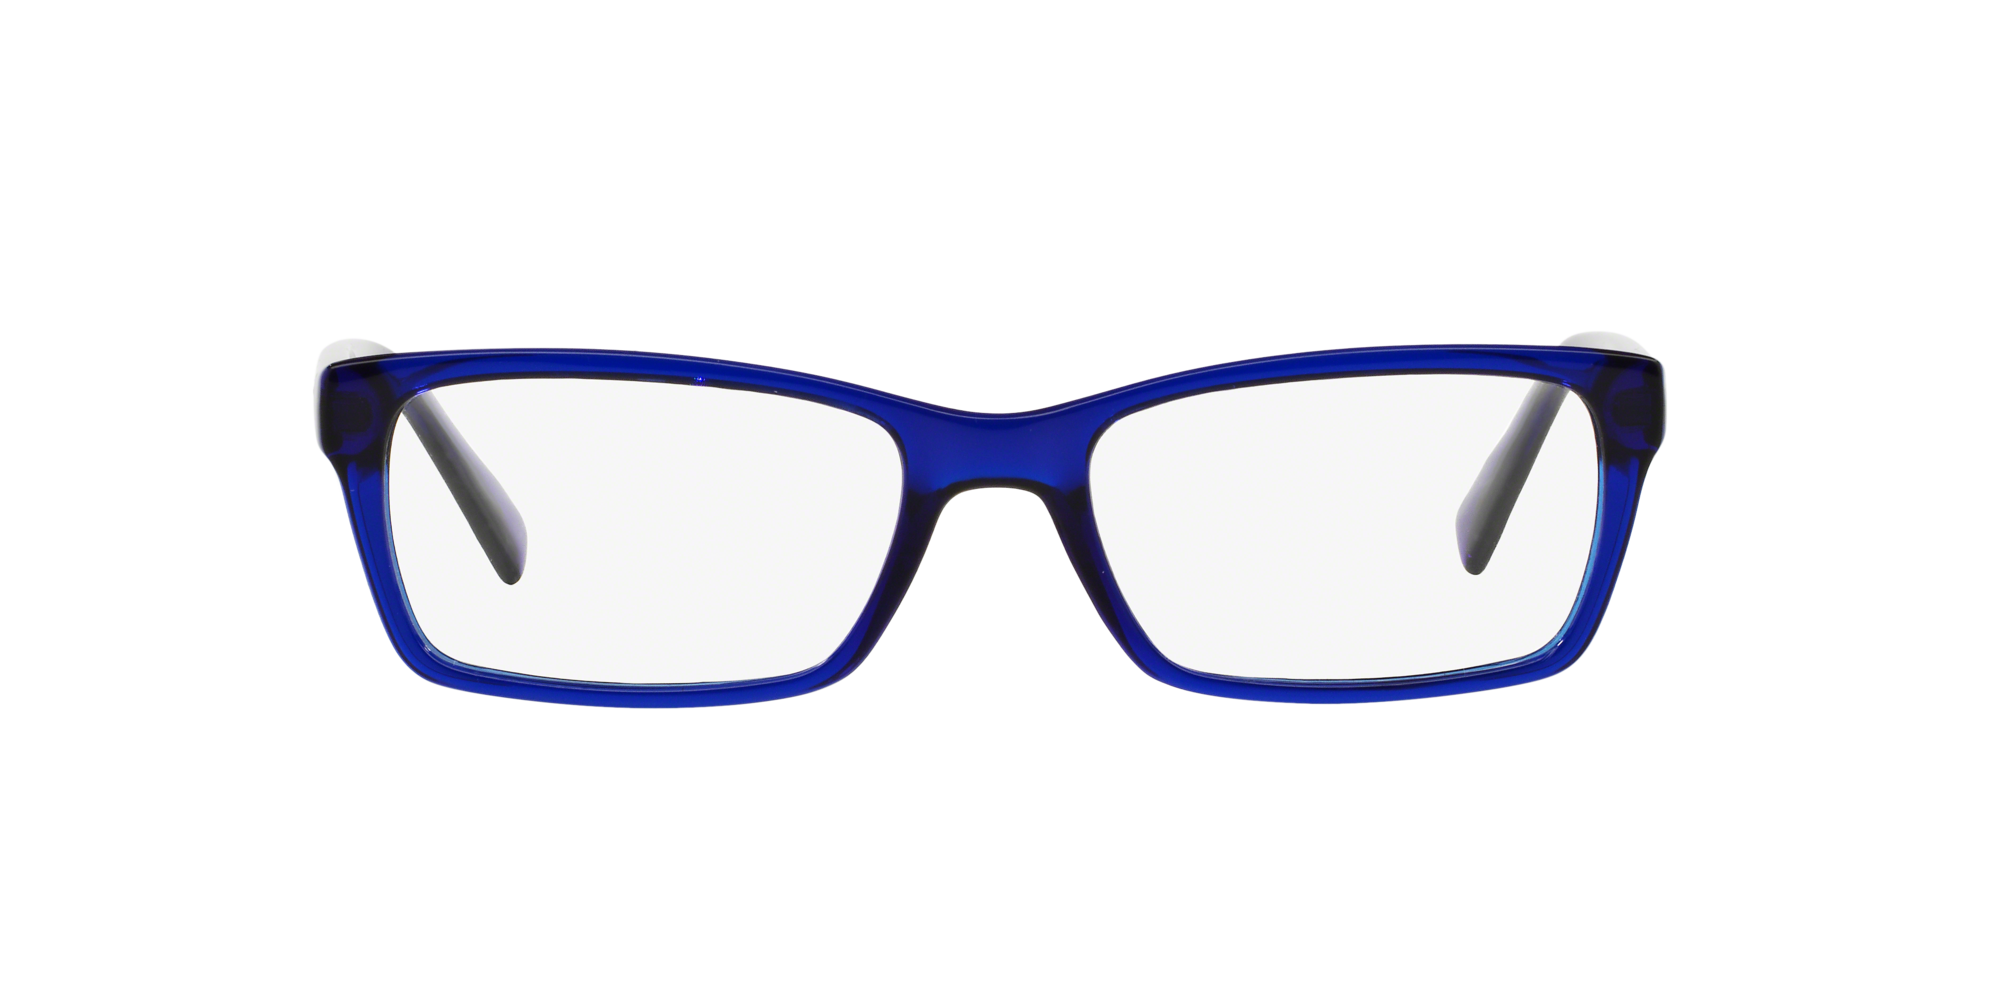 armani glasses blue